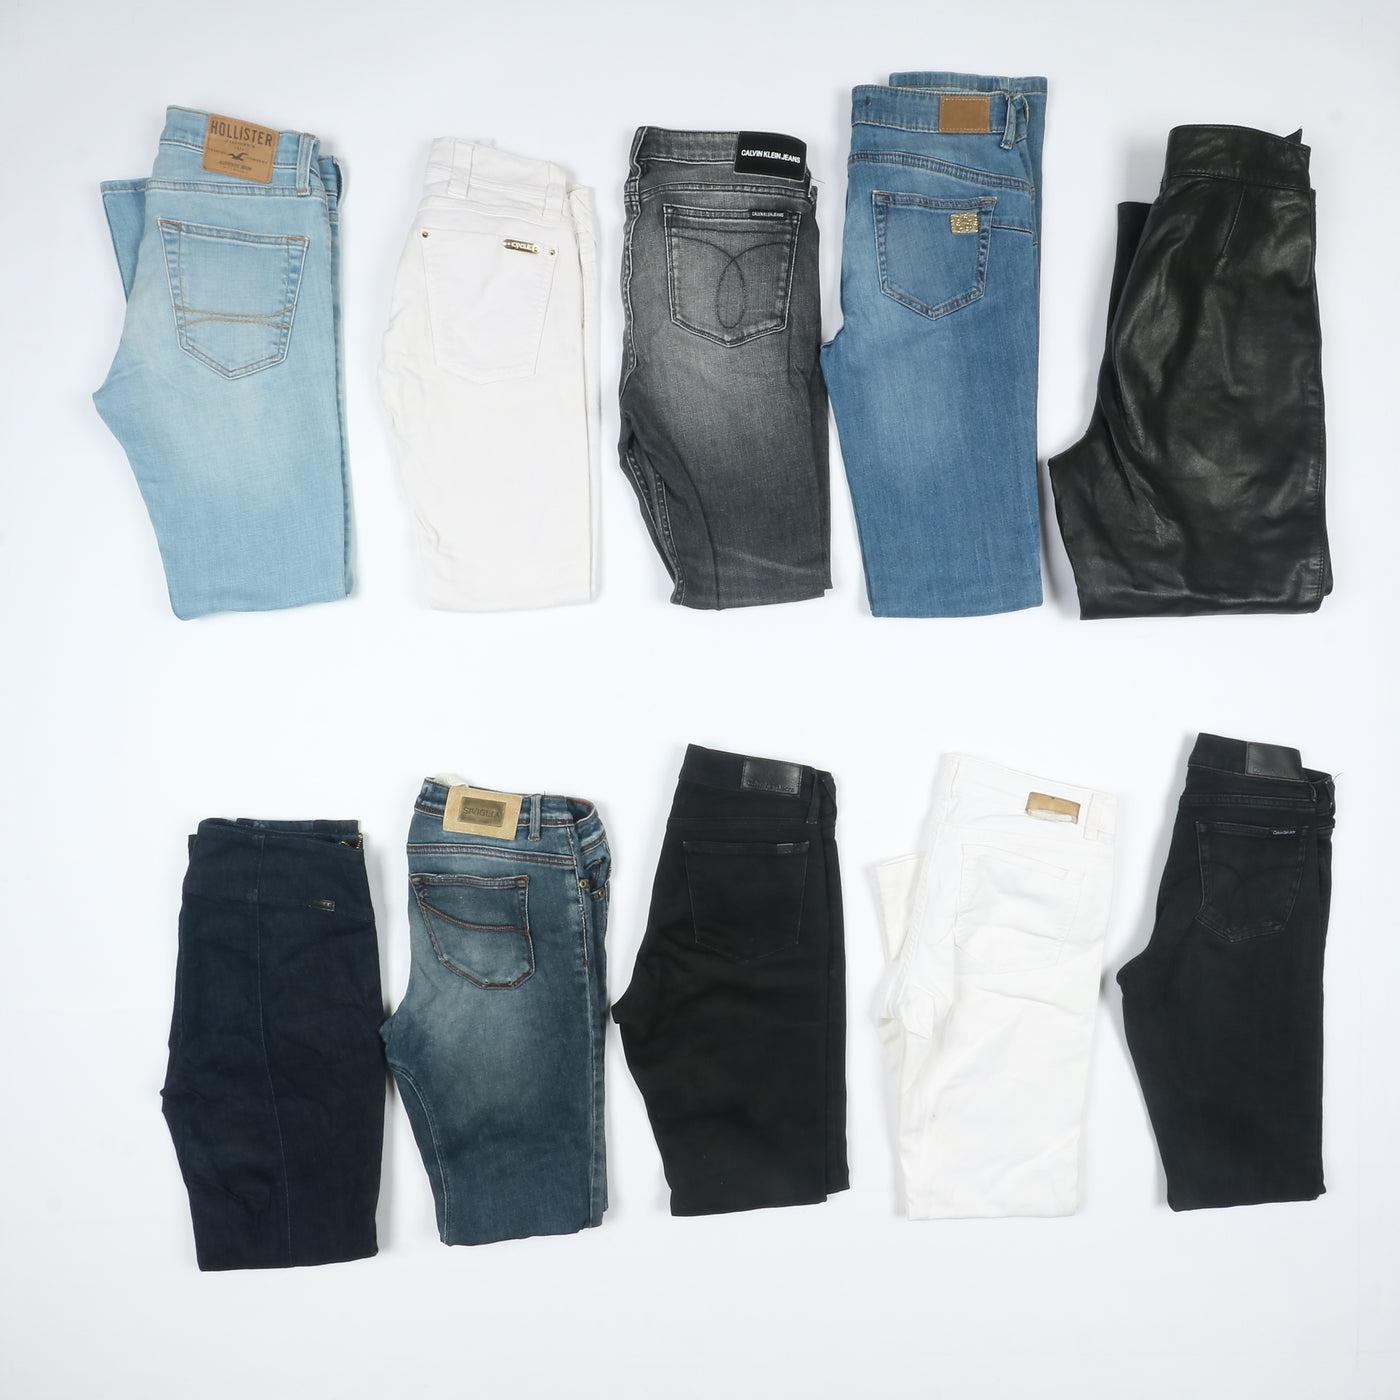 Pantaloni Donna Jeans firmati e vintage stock 61 pz Hollister, Dondup, CK, La Martina ...